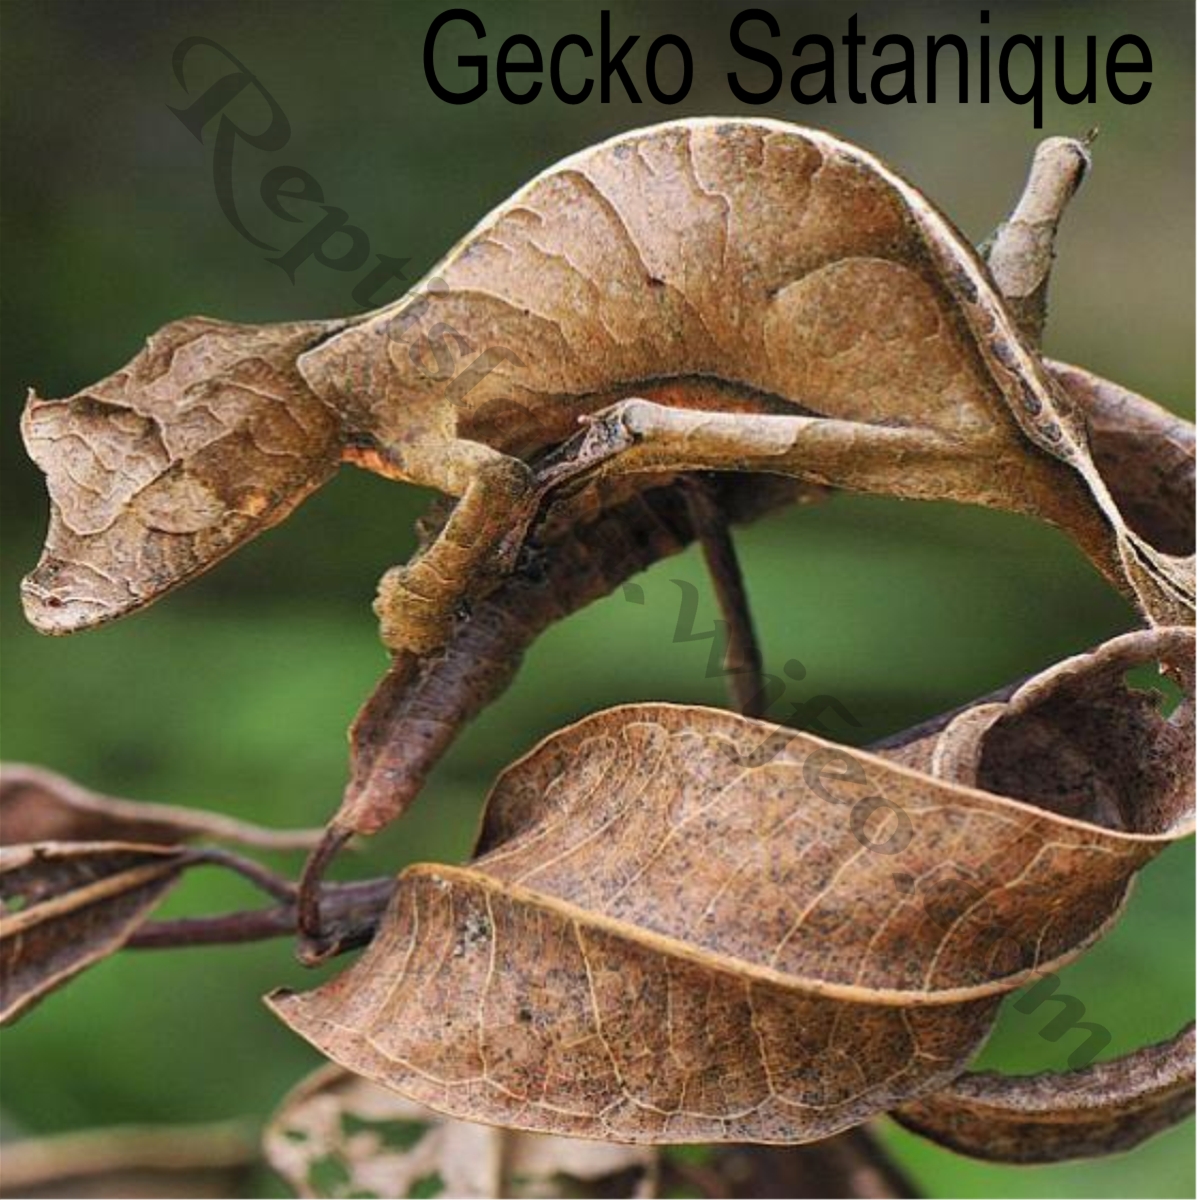 Gecko-satanique-2.jpg